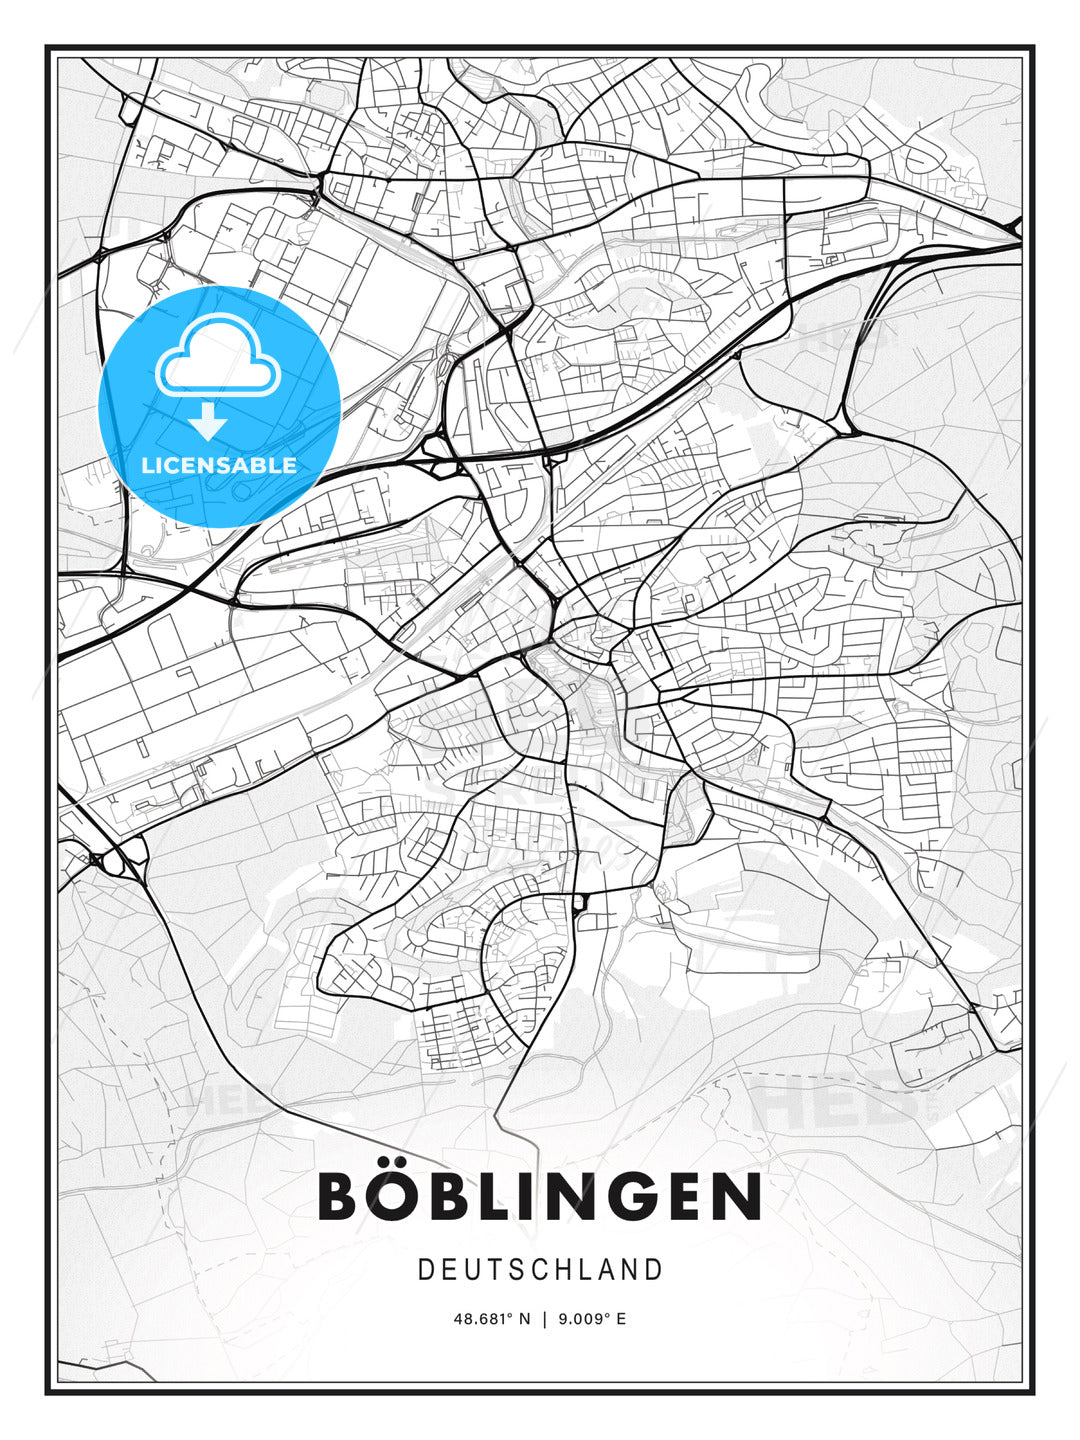 BÖBLINGEN / Boblingen, Germany, Modern Print Template in Various Formats - HEBSTREITS Sketches